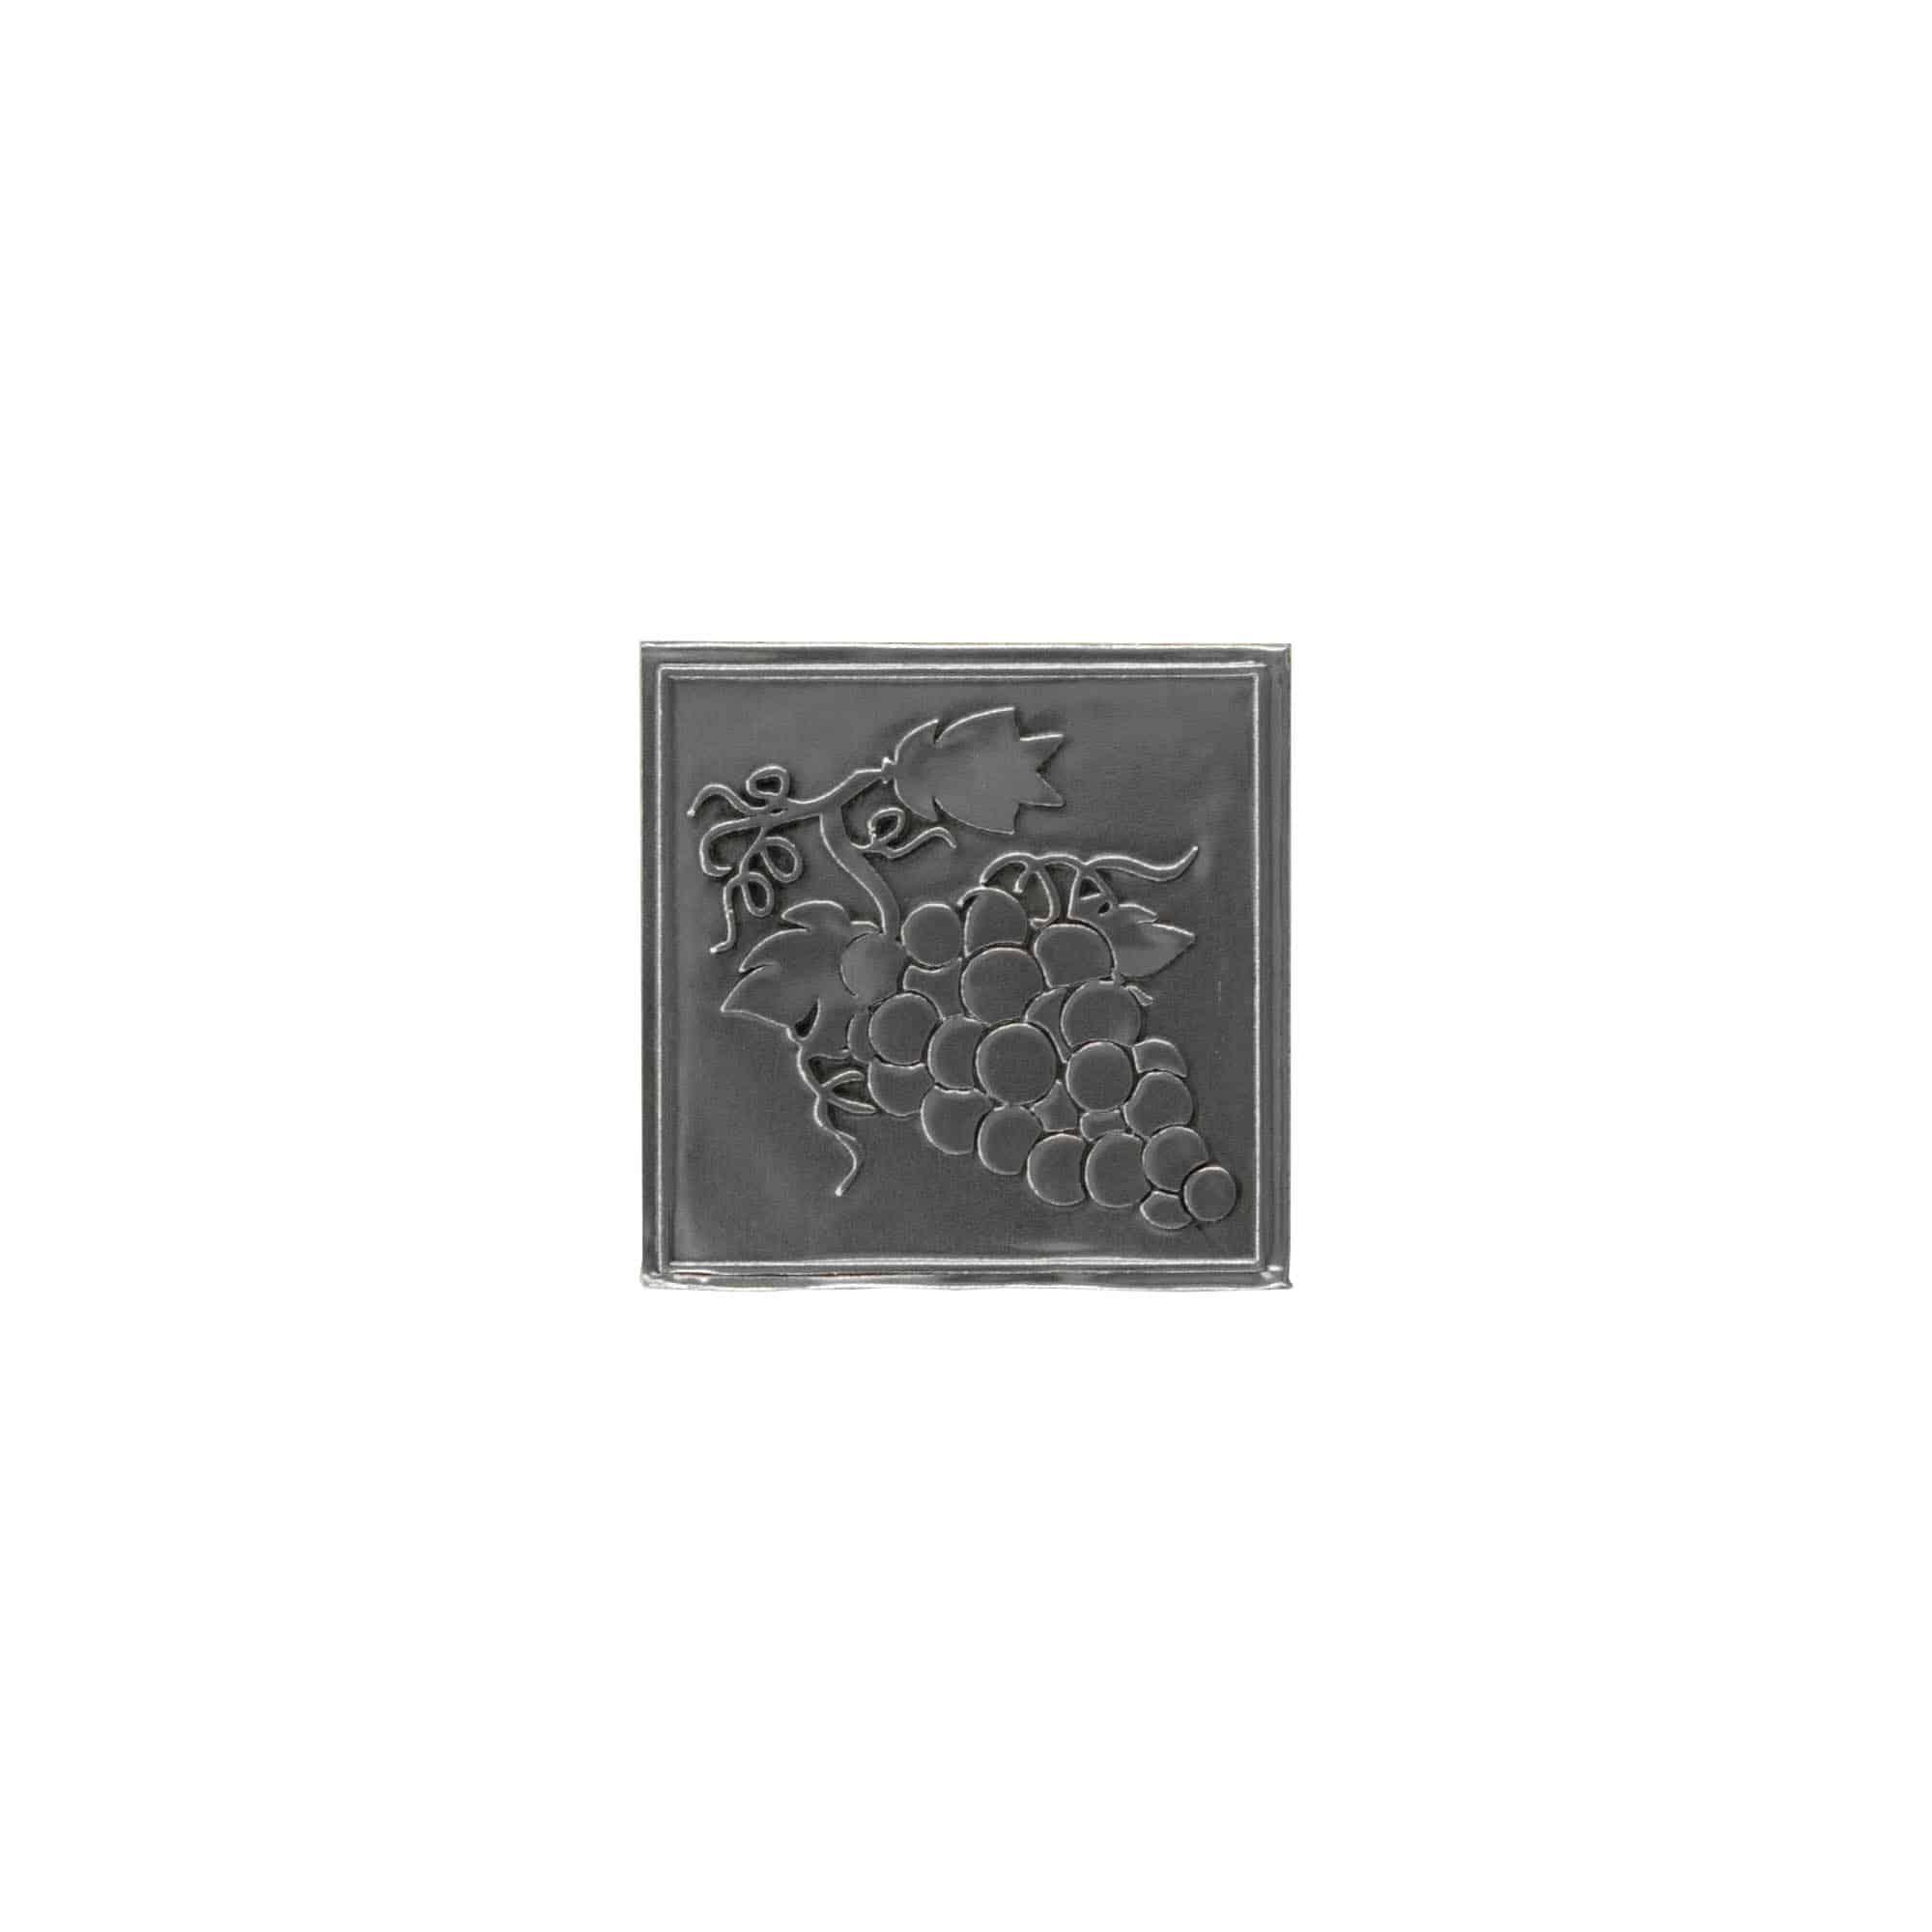 Etykieta cynowa 'Winogrona', kwadratowa, metal, kolor srebrny